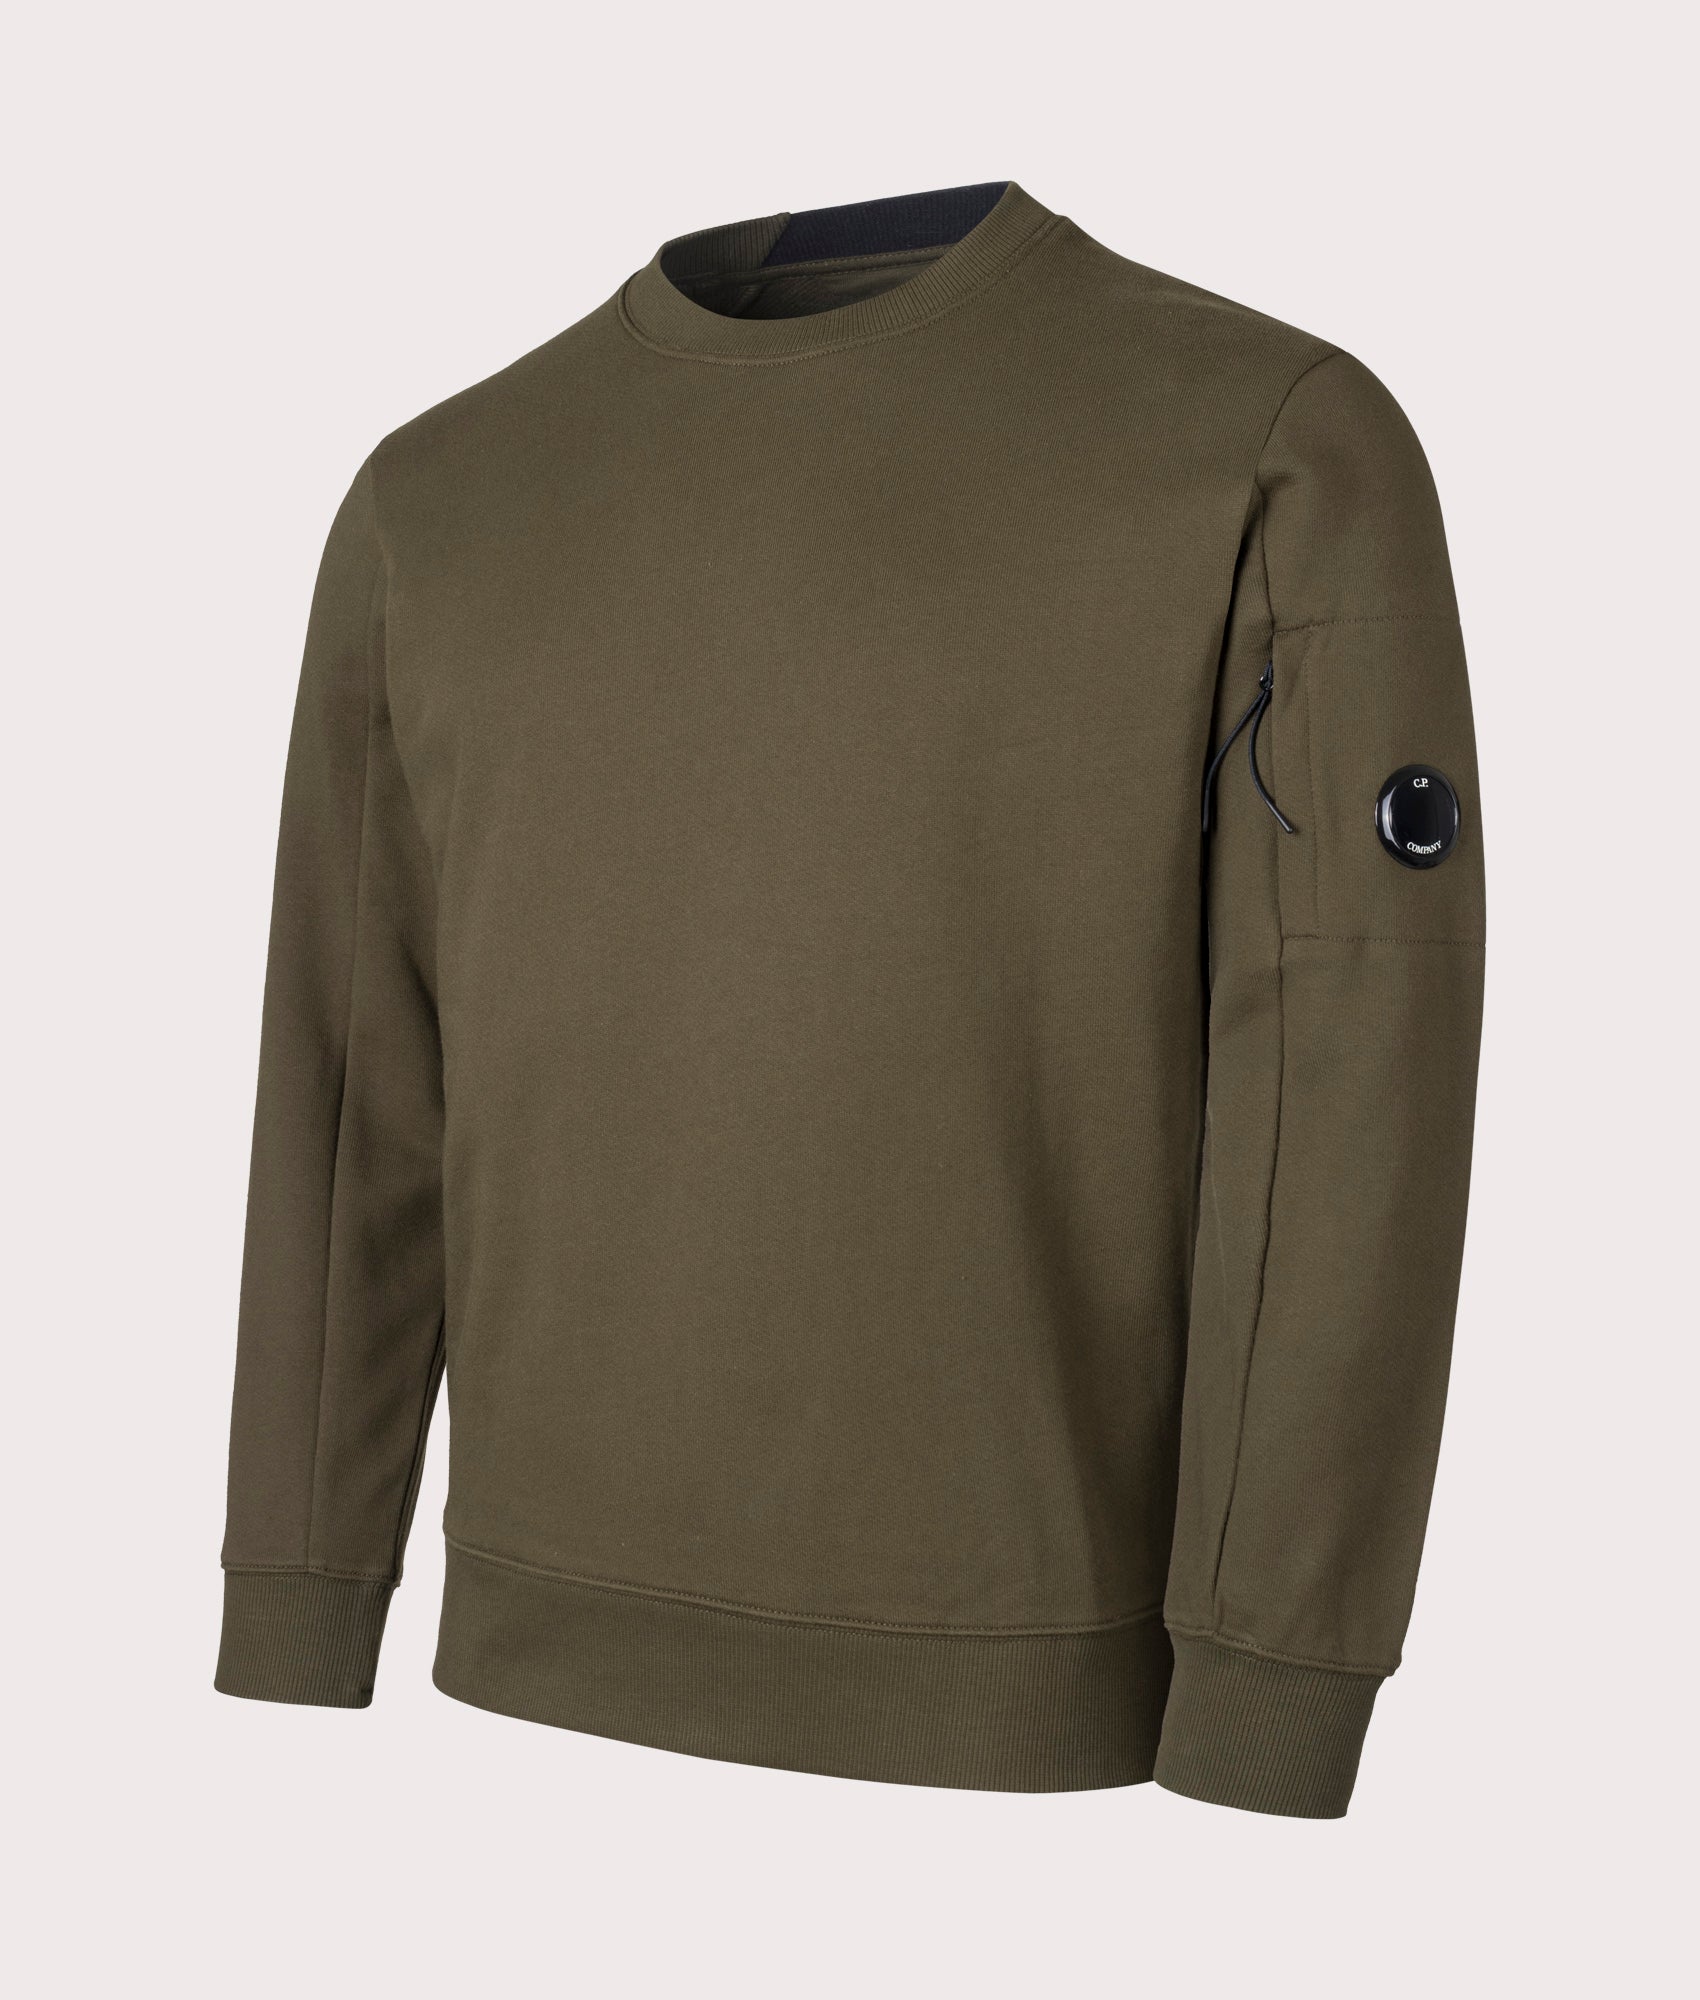 C.P. Company Mens Diagonal Raised Fleece Sweatshirt - Colour: 683 Ivy Green - Size: Small